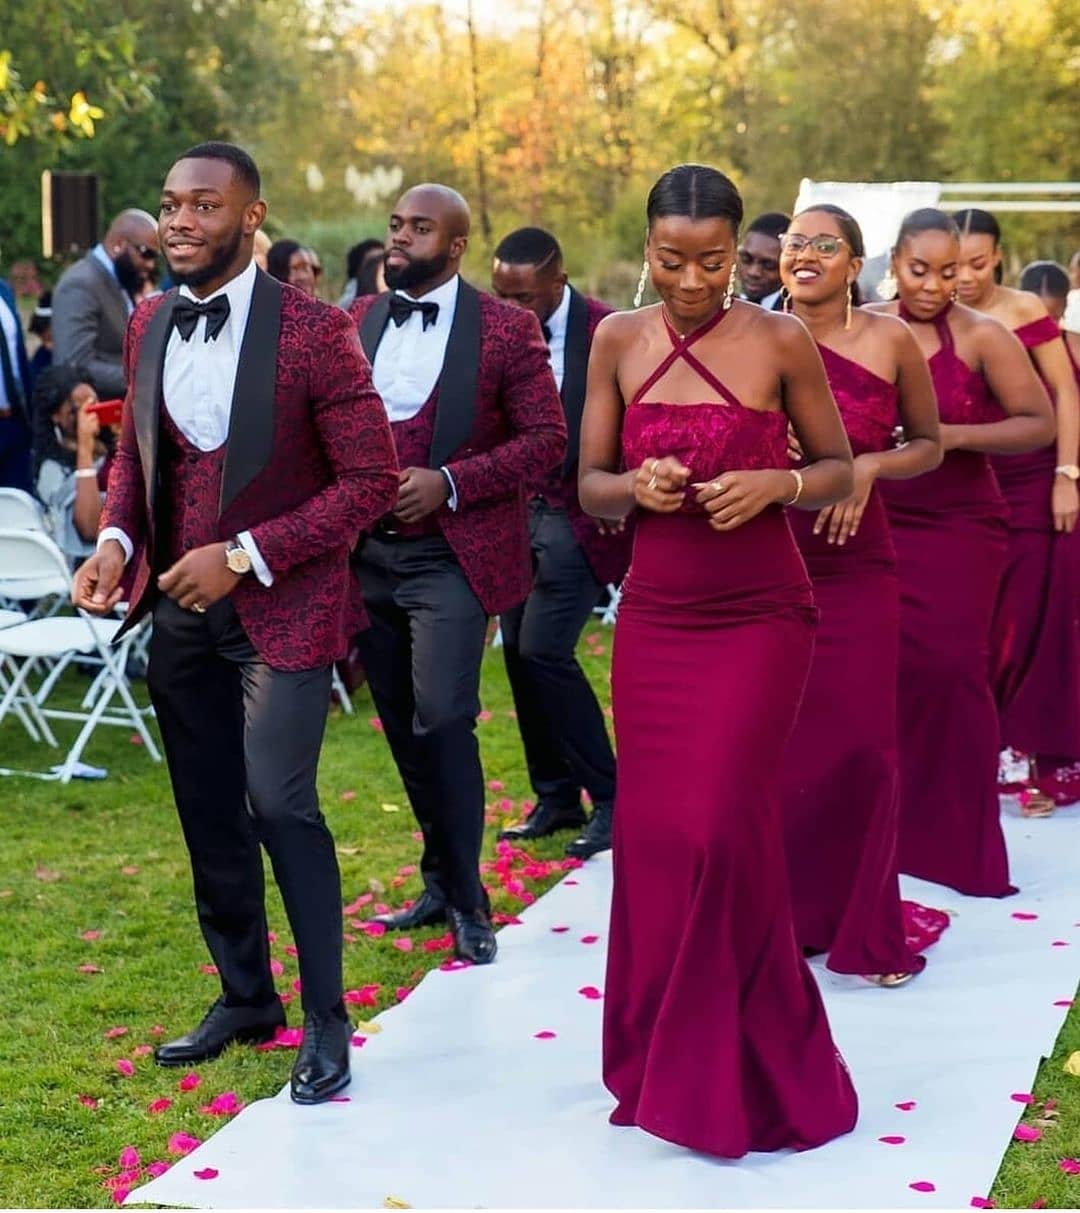 traditional wedding attire 2021 for black women - fashion attire 5